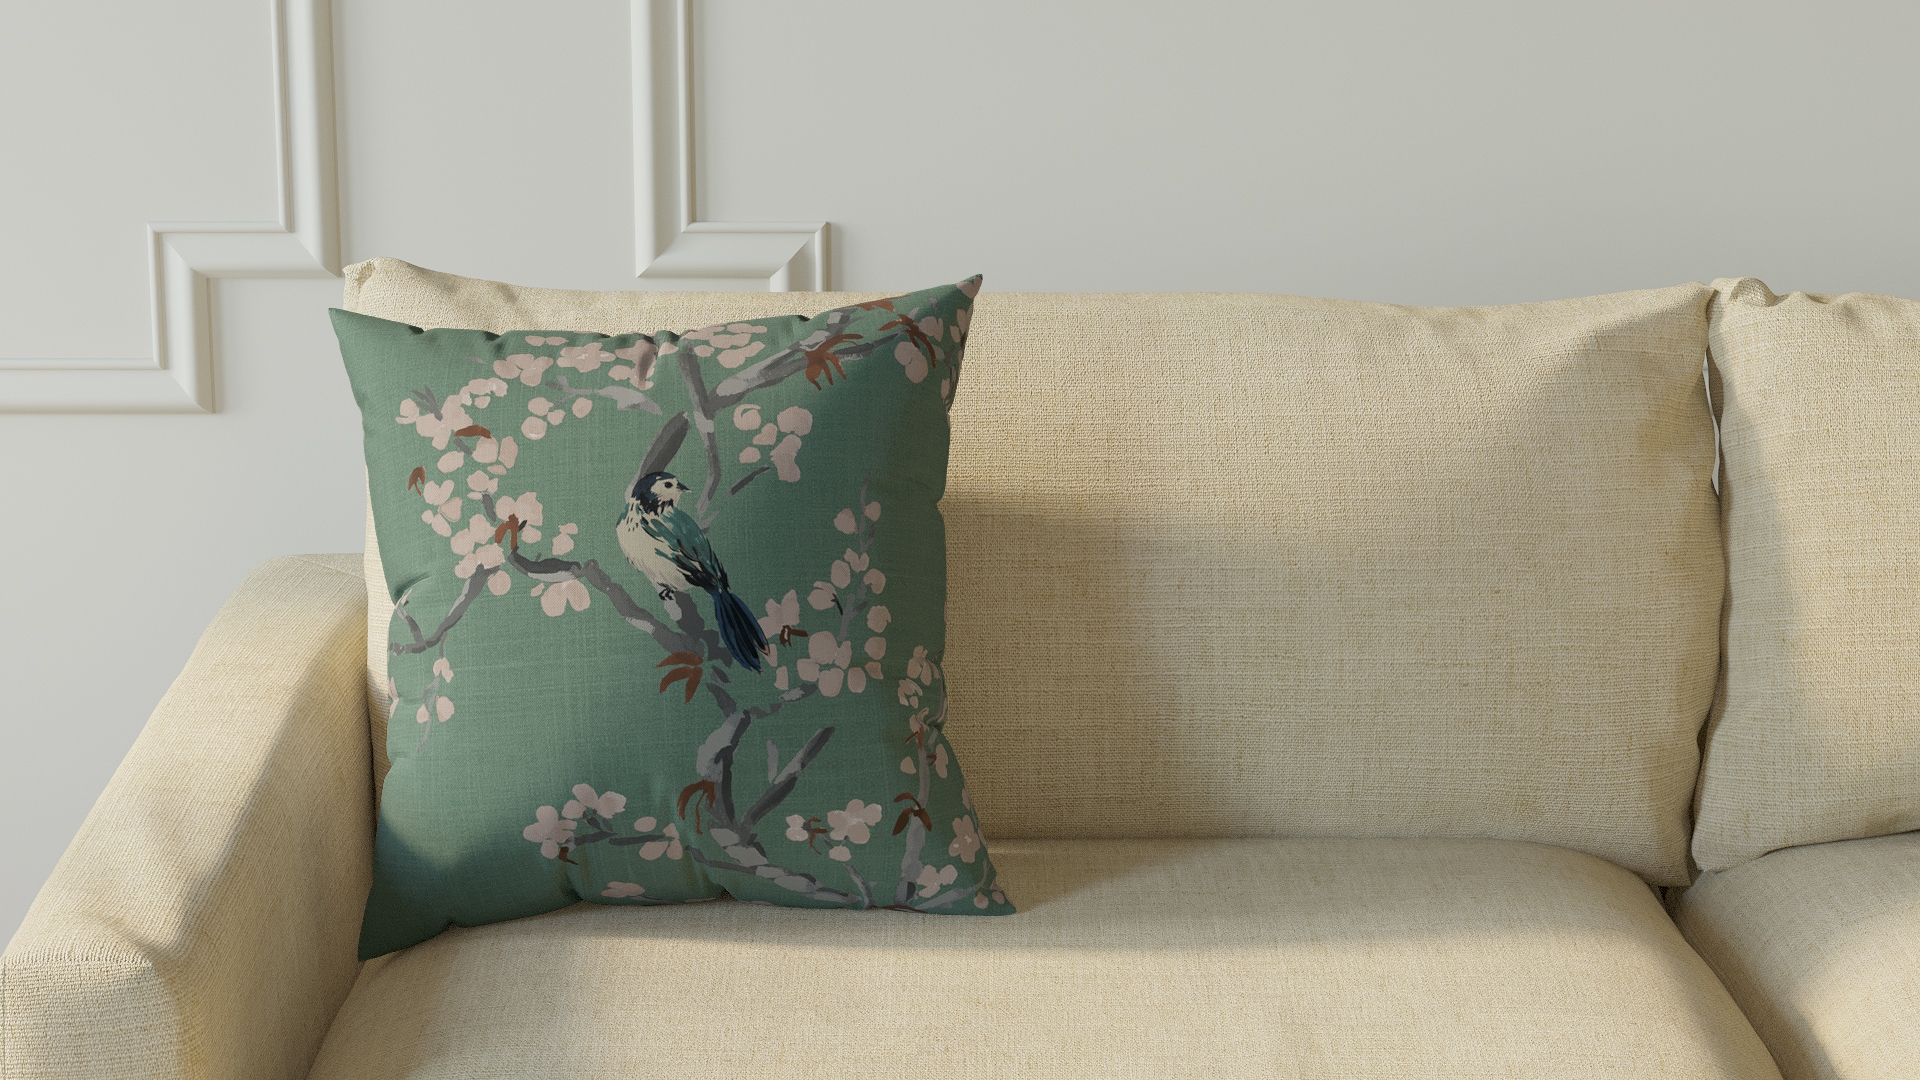 Throw Pillow 18", Mint Cherry Blossom, 18" x 18" - Image 2